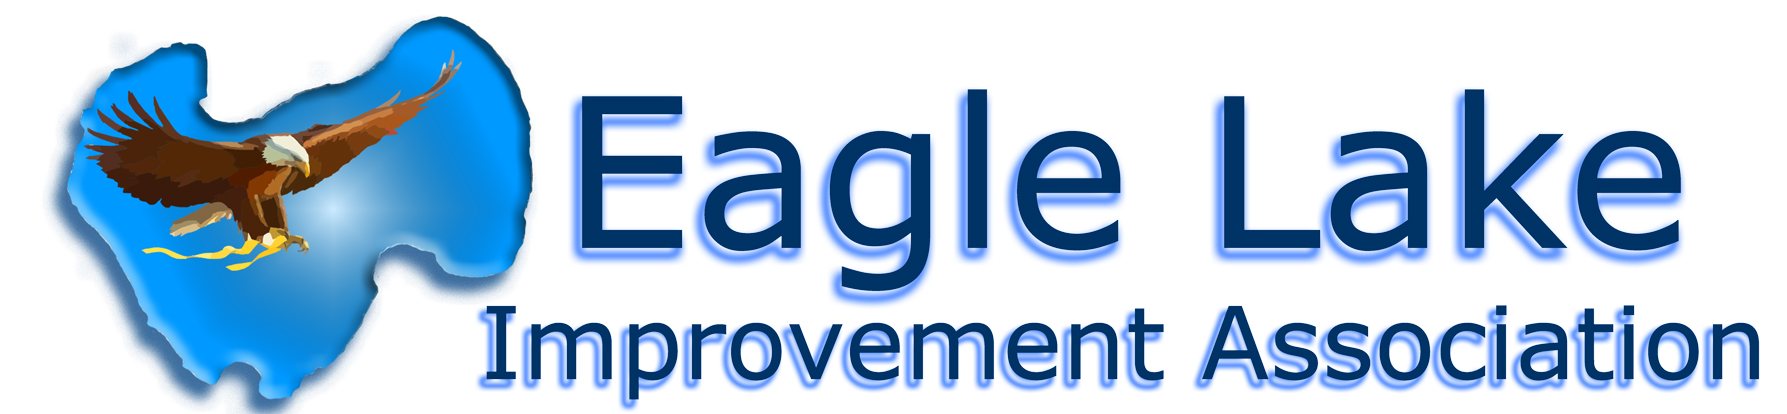 Eagle Lake Improvement Association logo